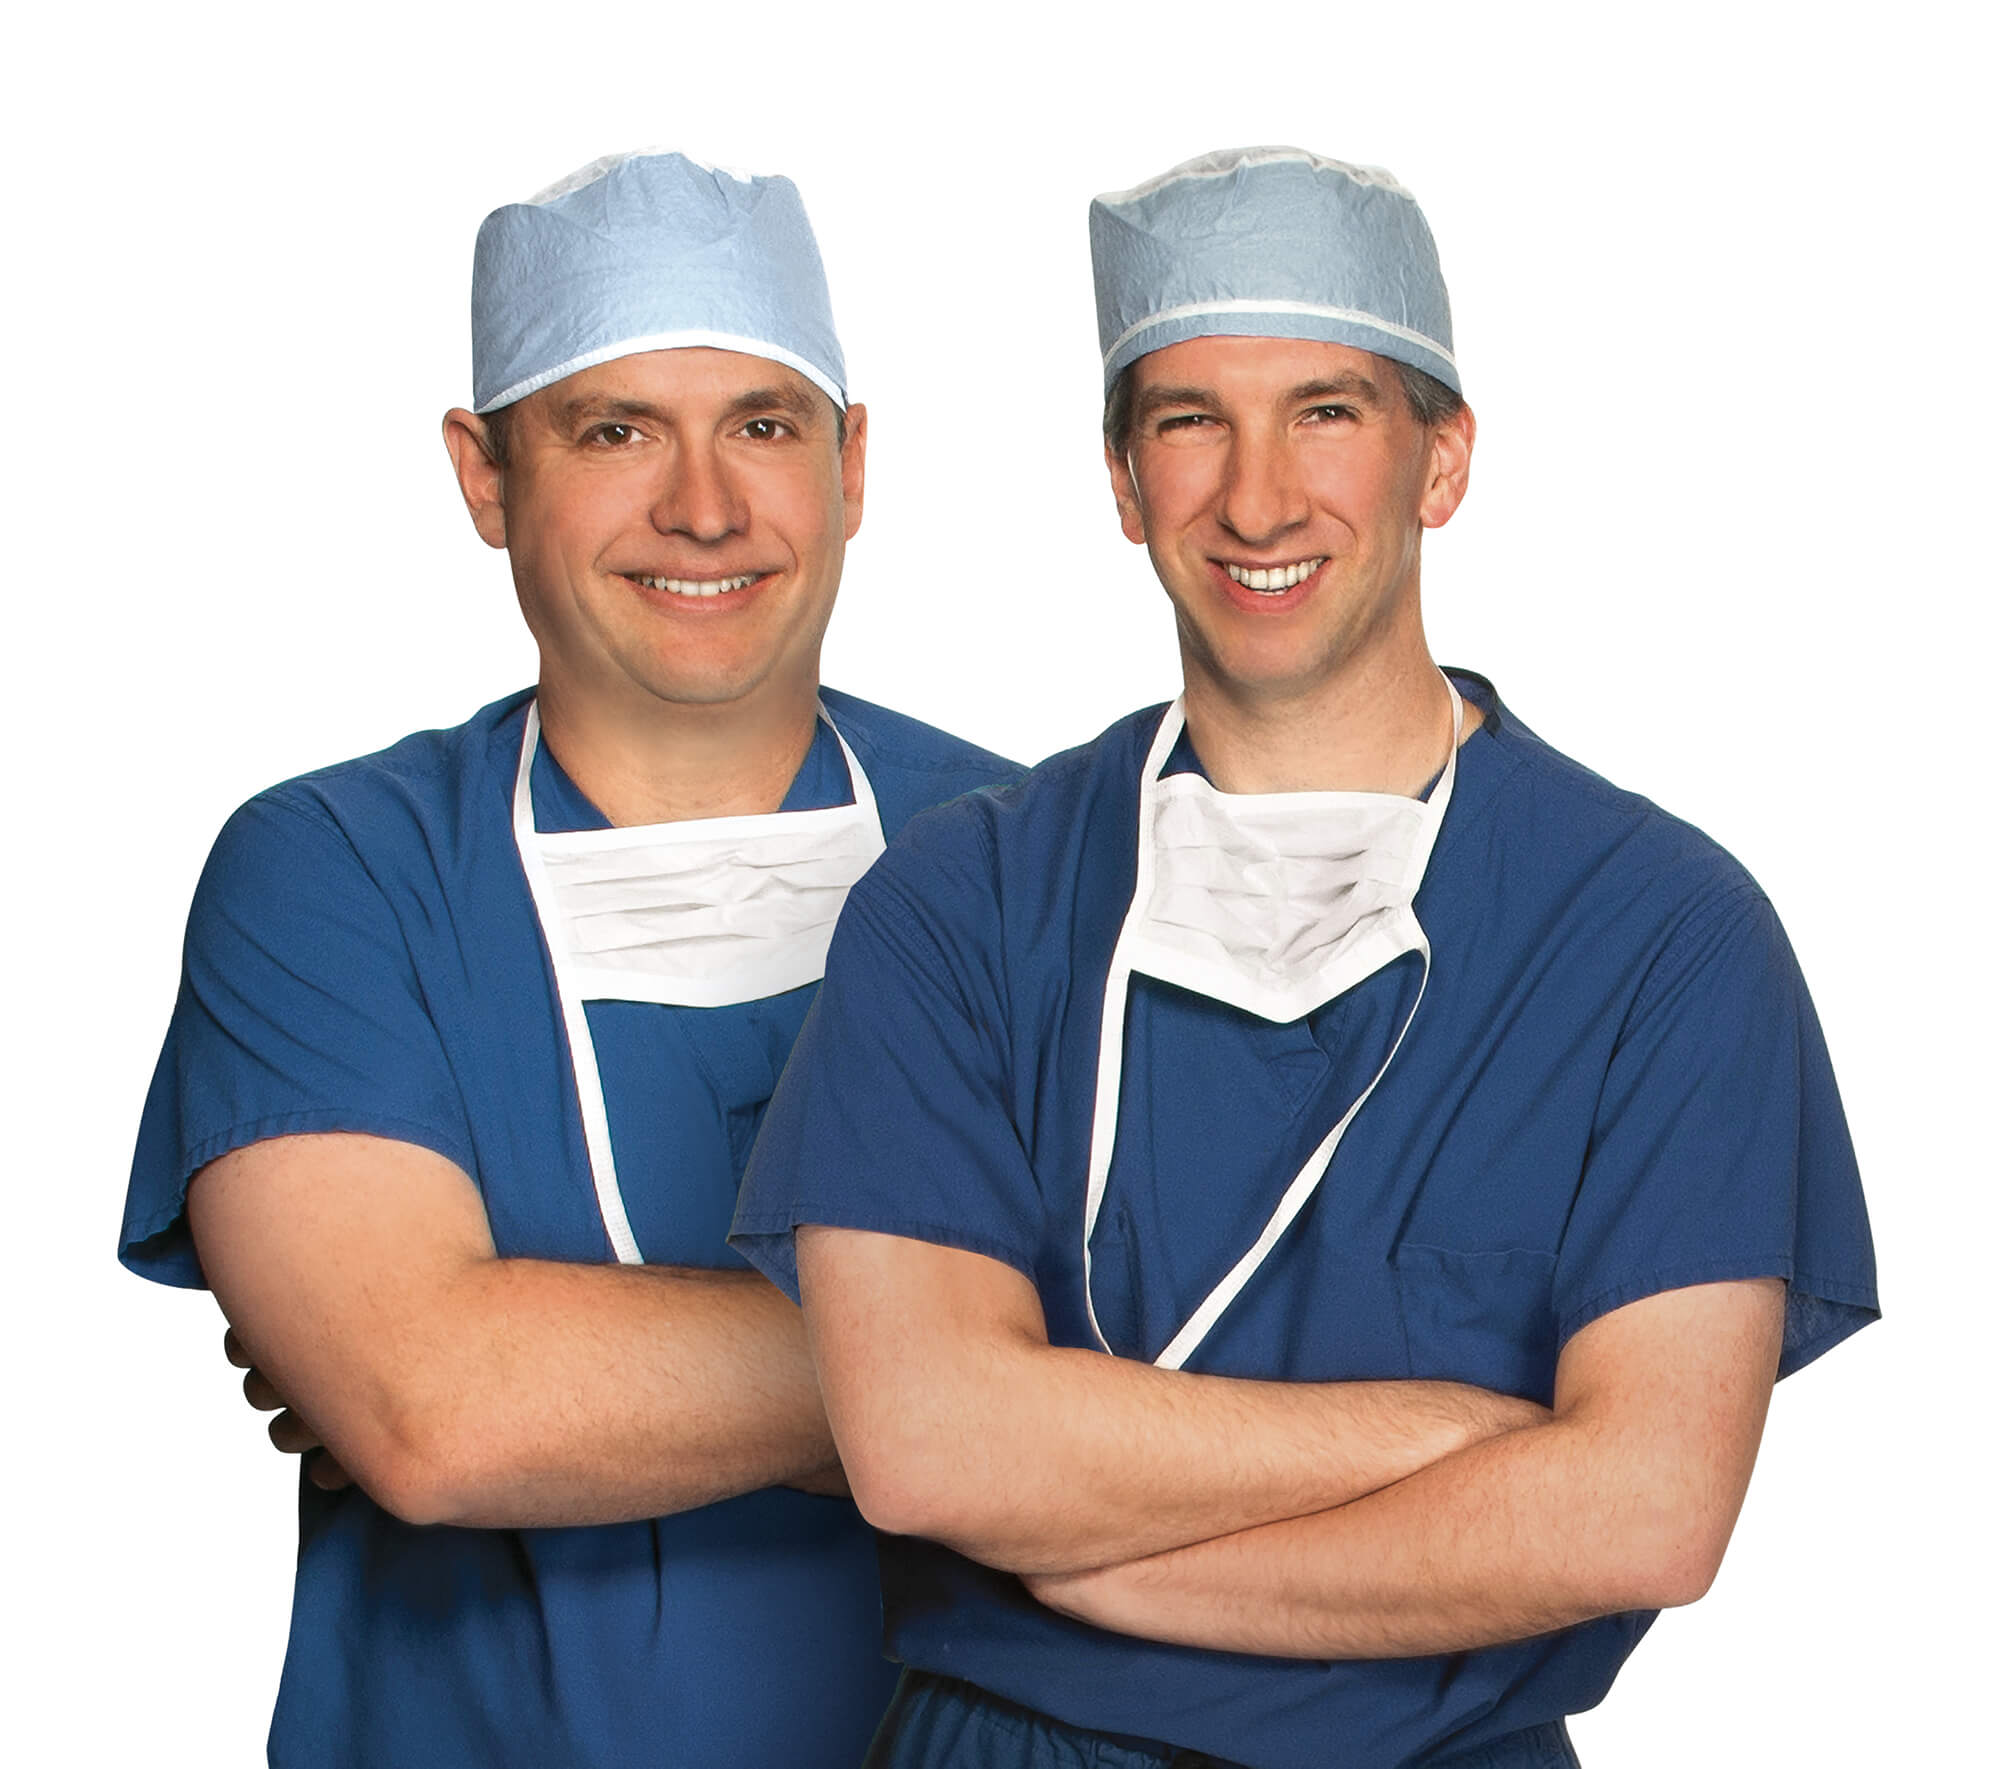 Adam Altman医生和Jonathan Primack医生是宾州眼科顾问公司的LASIK专家。他们是从事激光眼科手术、PRK手术、角膜手术和白内障手术的眼科外科医生。